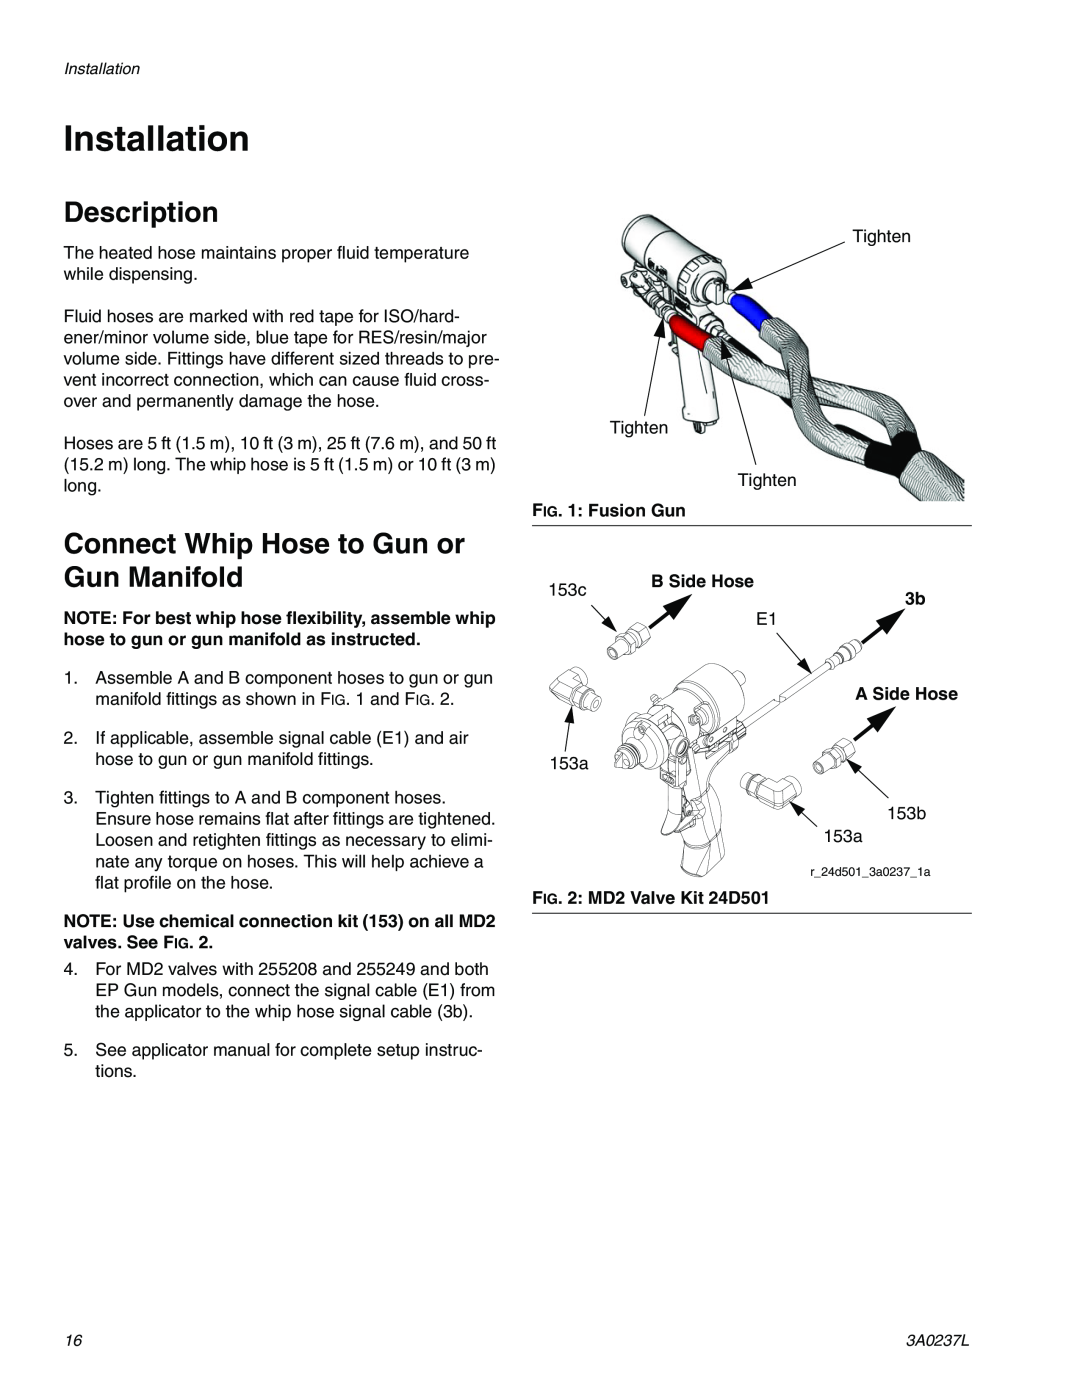 Graco 3A0237L Installation, Description, Connect Whip Hose to Gun or Gun Manifold, Fusion Gun, 153c, B Side Hose 